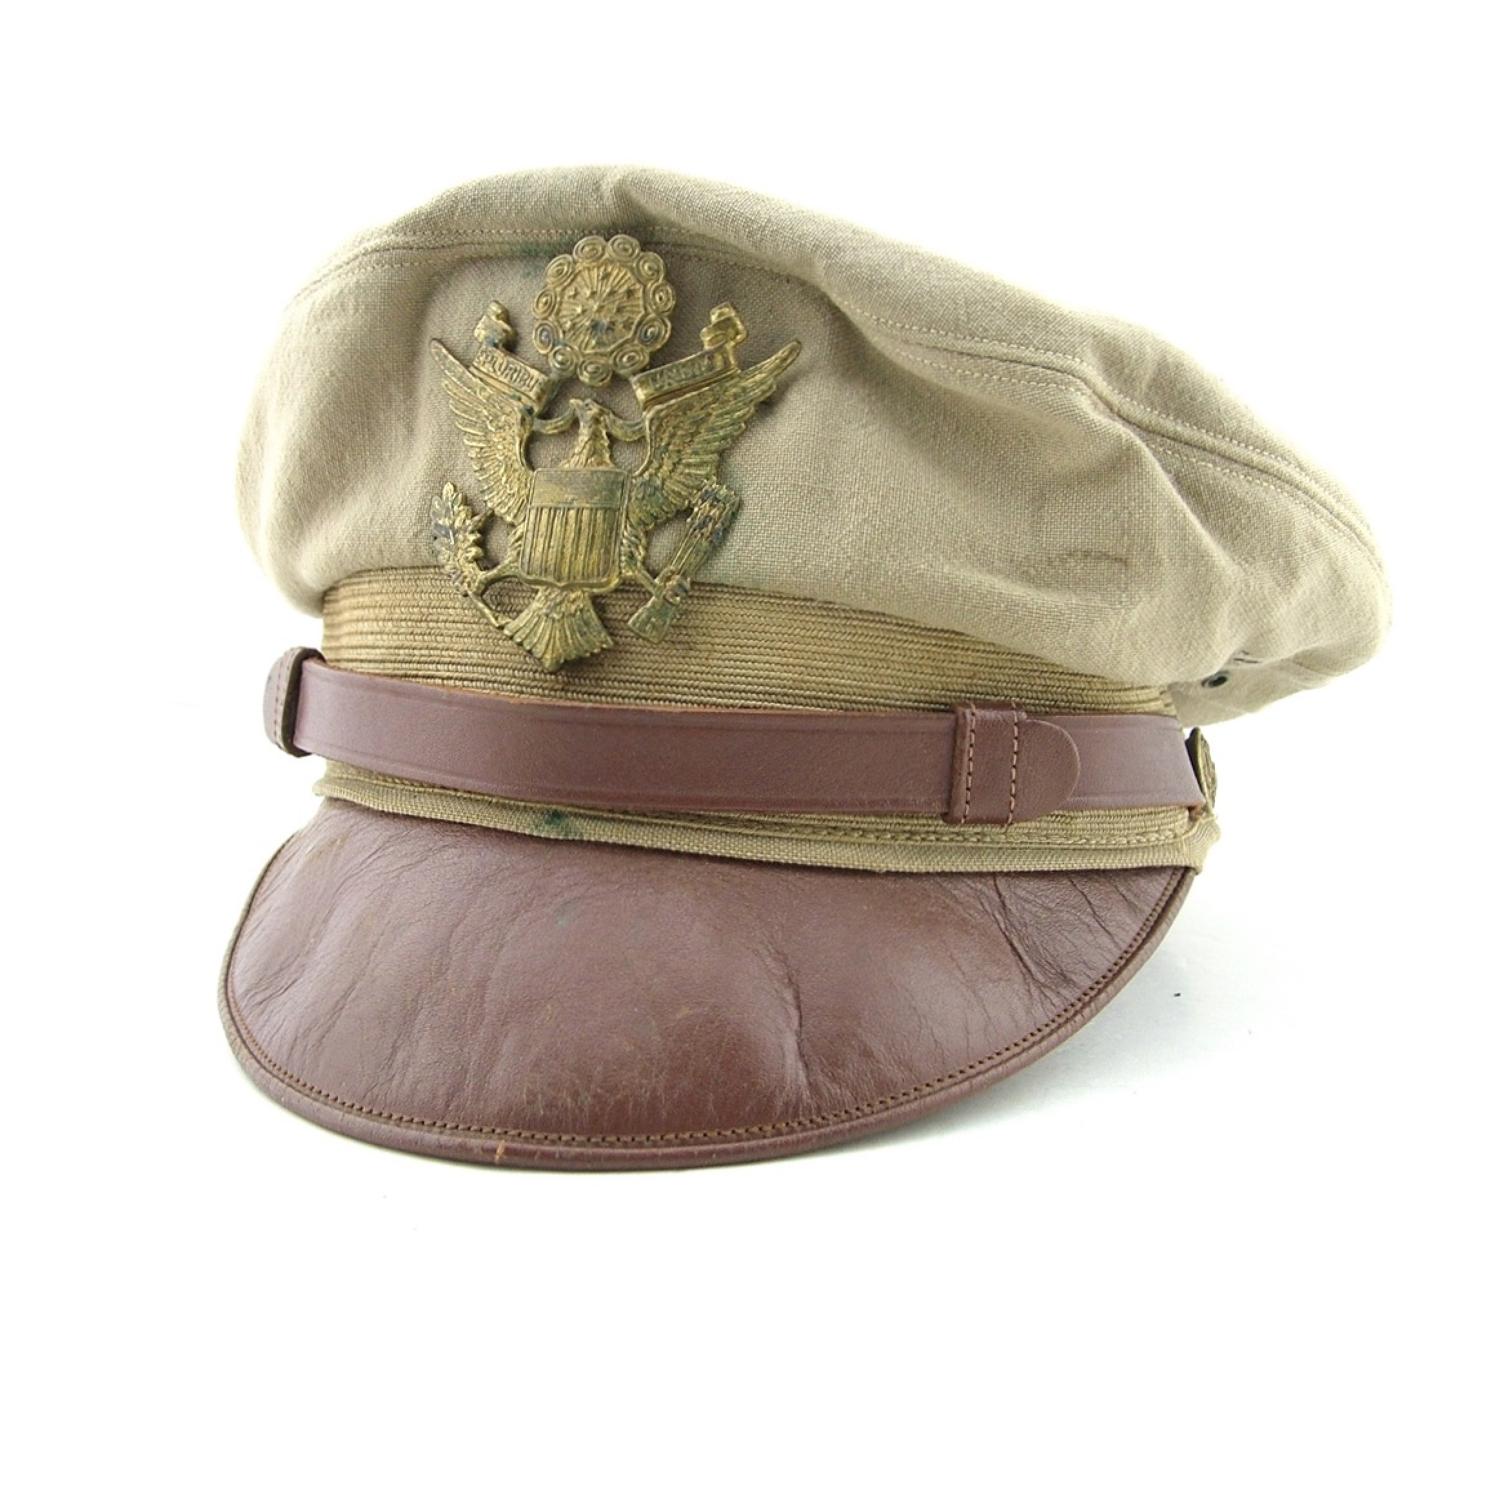 USAAF 'Tropical' Bancroft visor cap